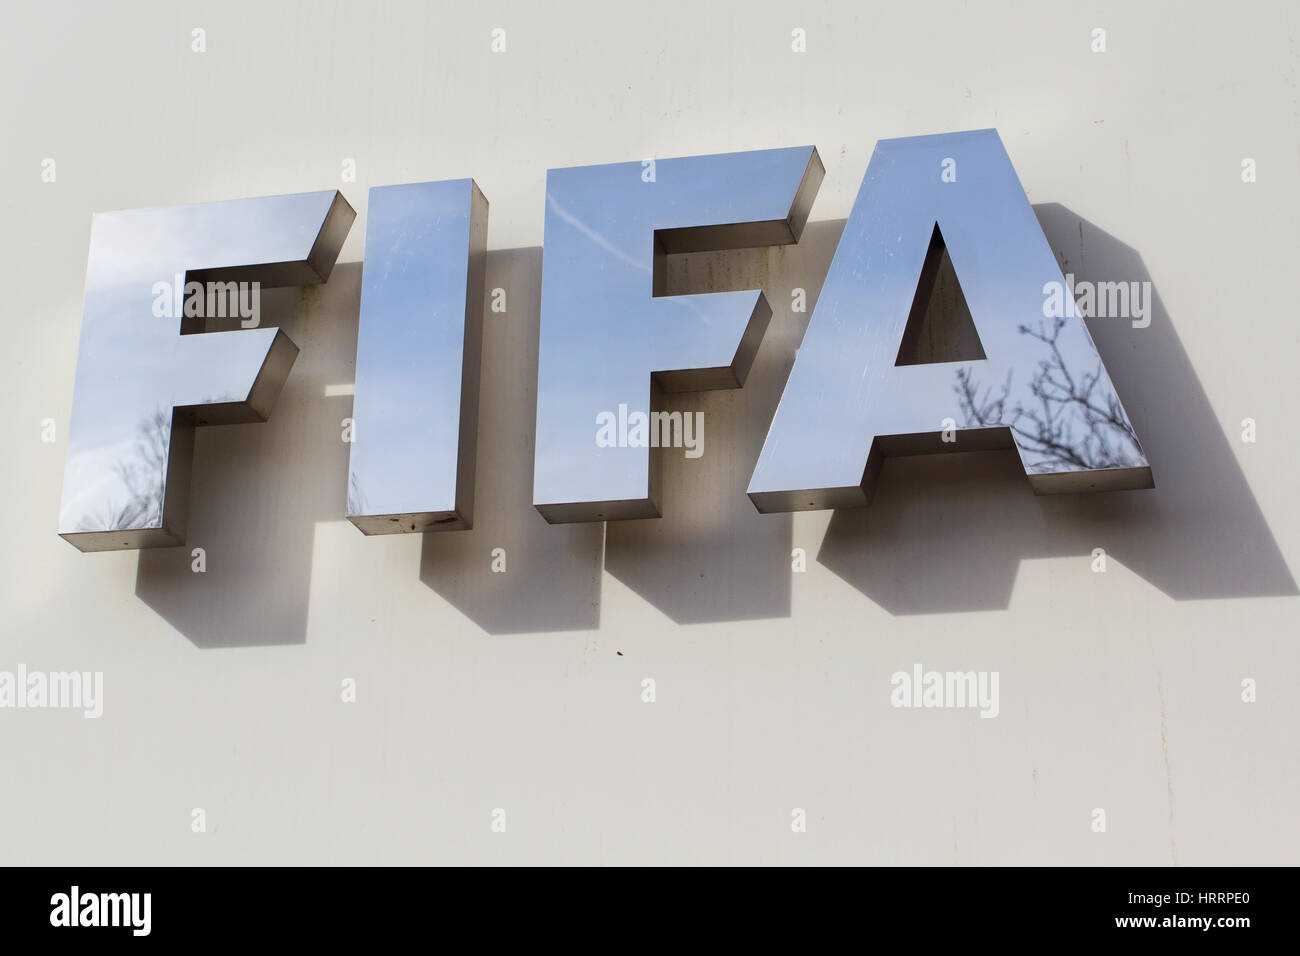 FIFA 23 Logo (High-Resolution)